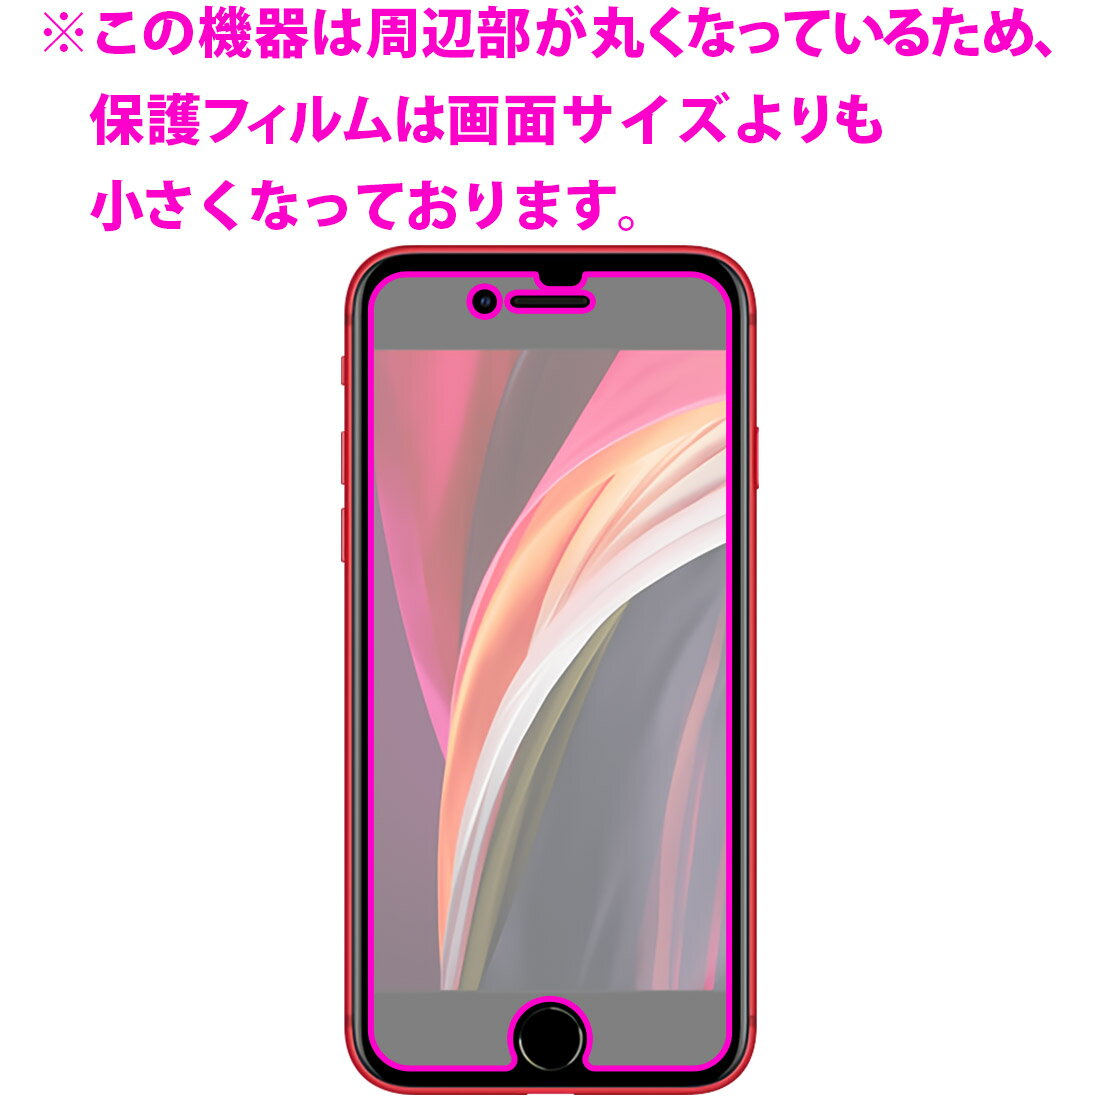 Perfect Shield iPhone SE (第3世代) / iPhone SE (第2世代) 前面のみ 日本製 自社製造直販